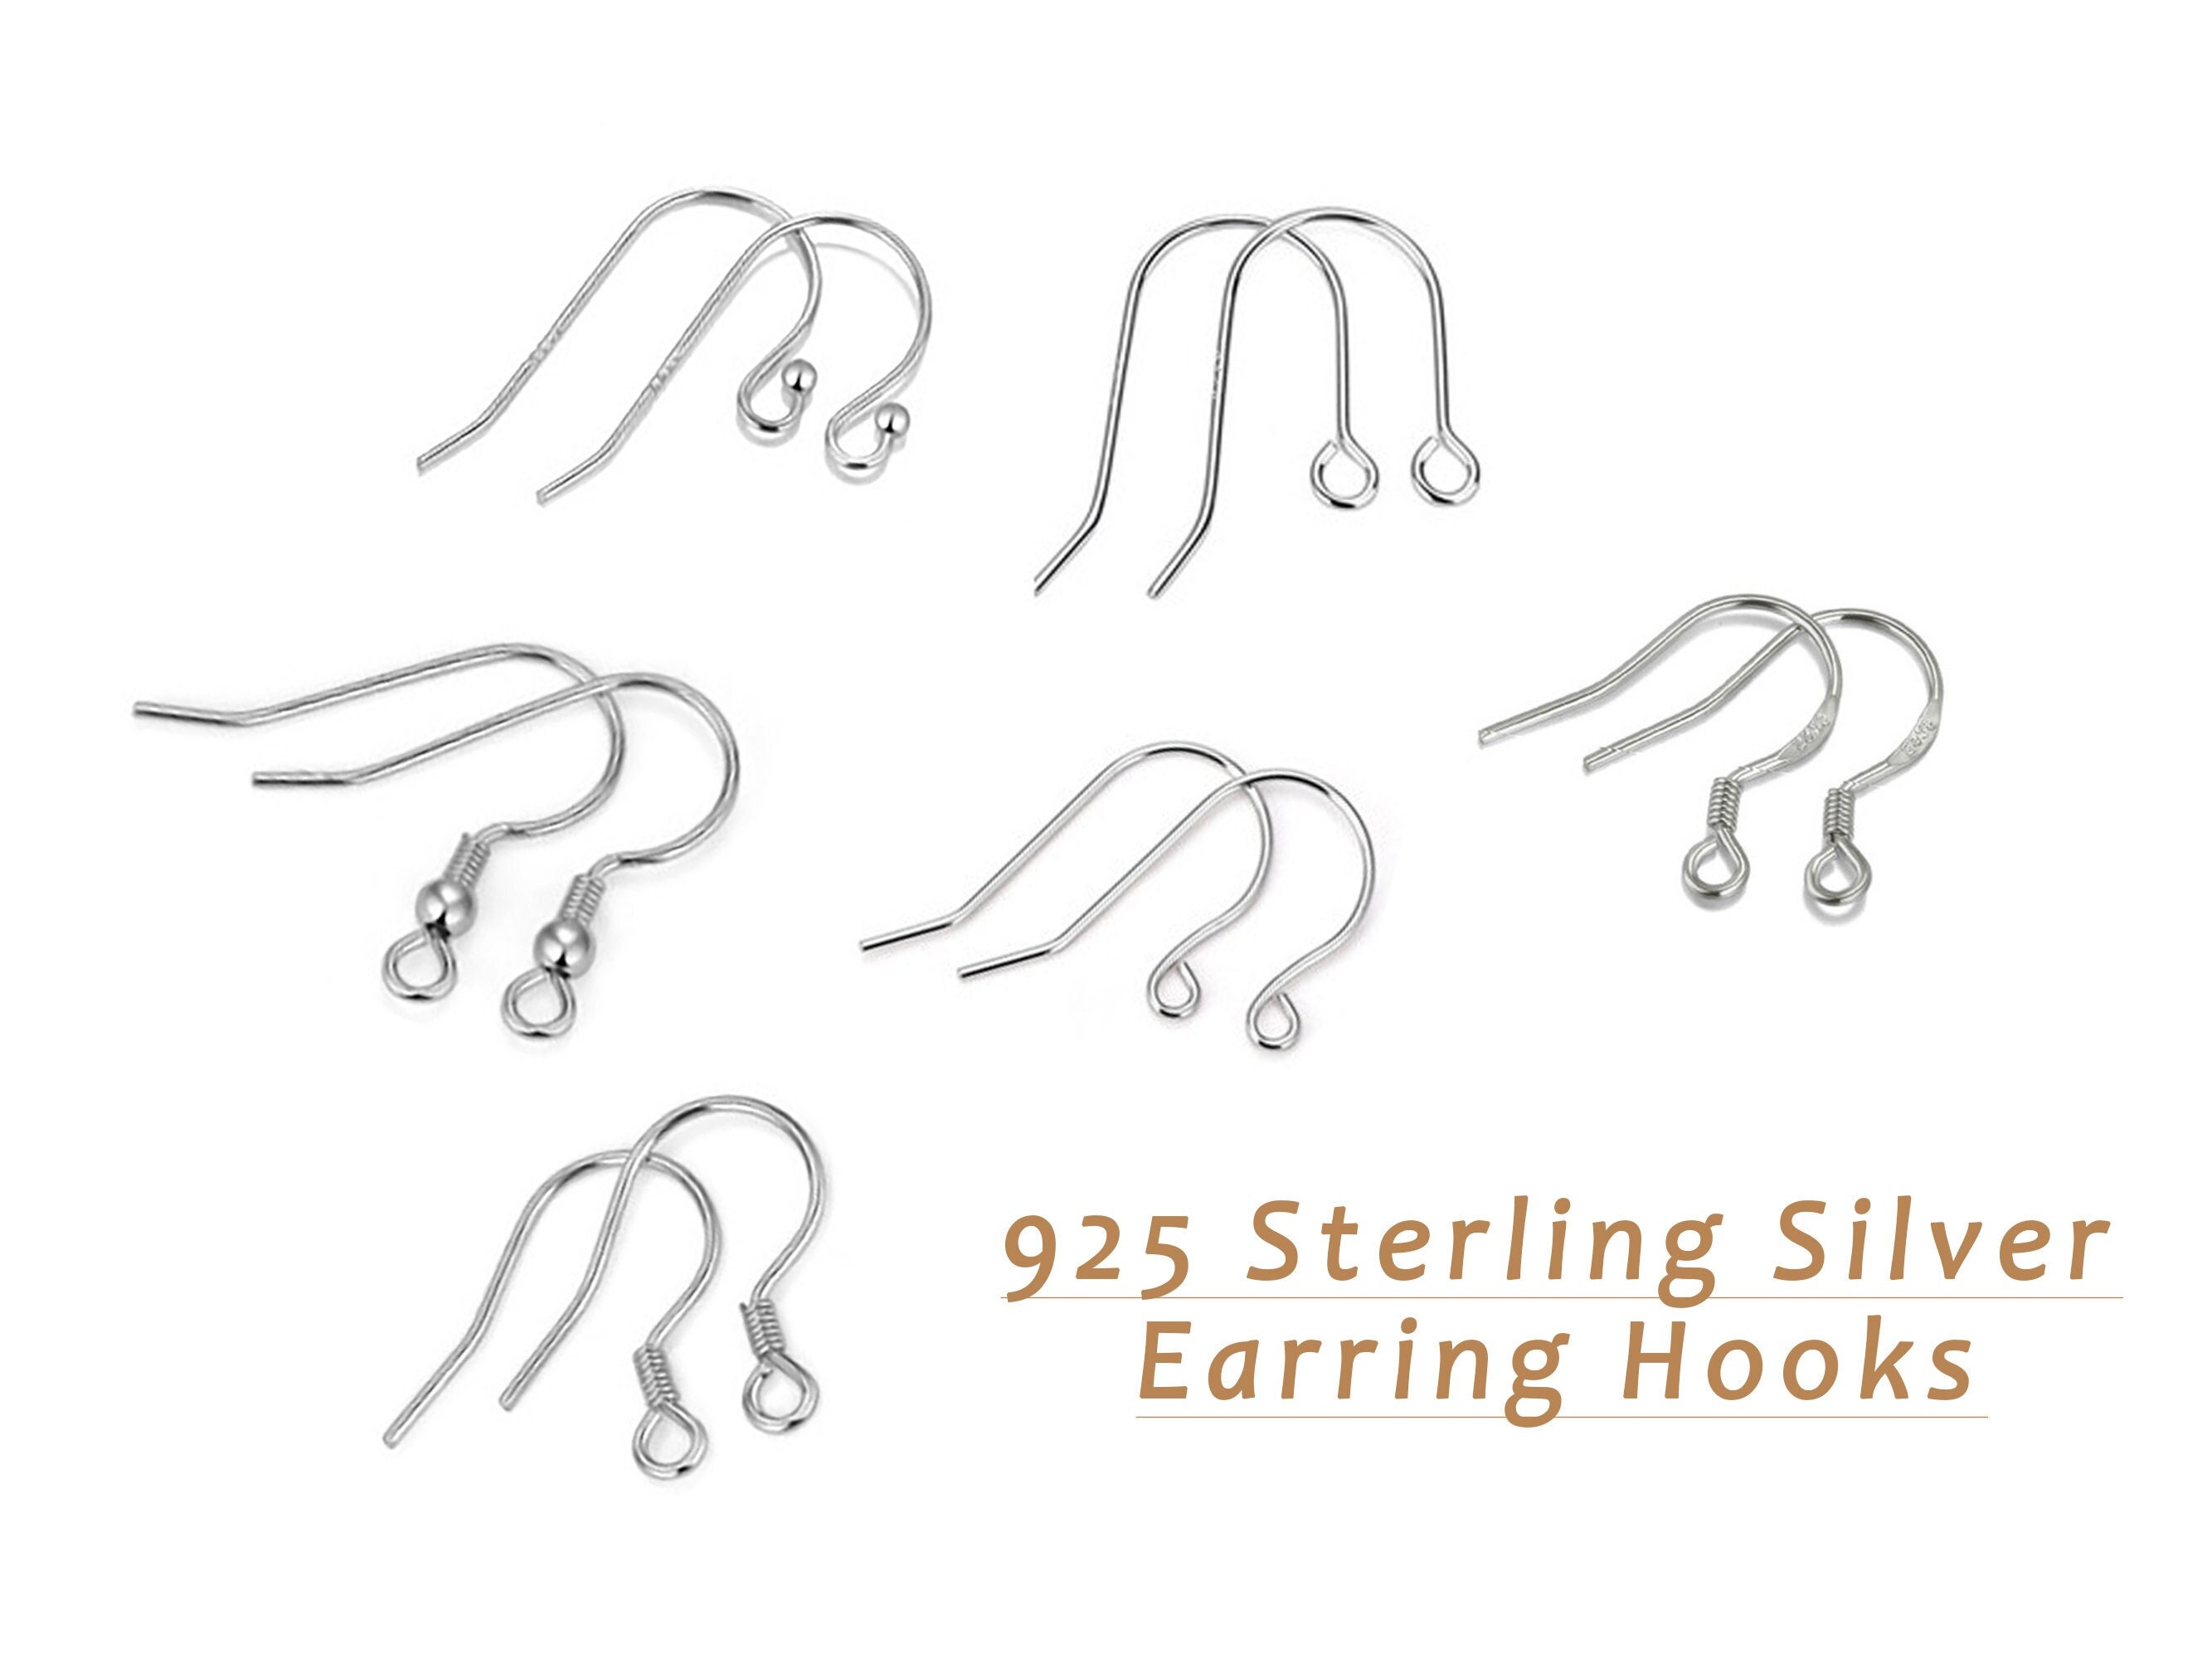 925 Sterling Silver Earring Hooks 200 Pcs, Gold Earring Hooks for Jewelry Making, Hypoallergenic Fish Hook Earrings Making Kit, DIY Earring, with 200P